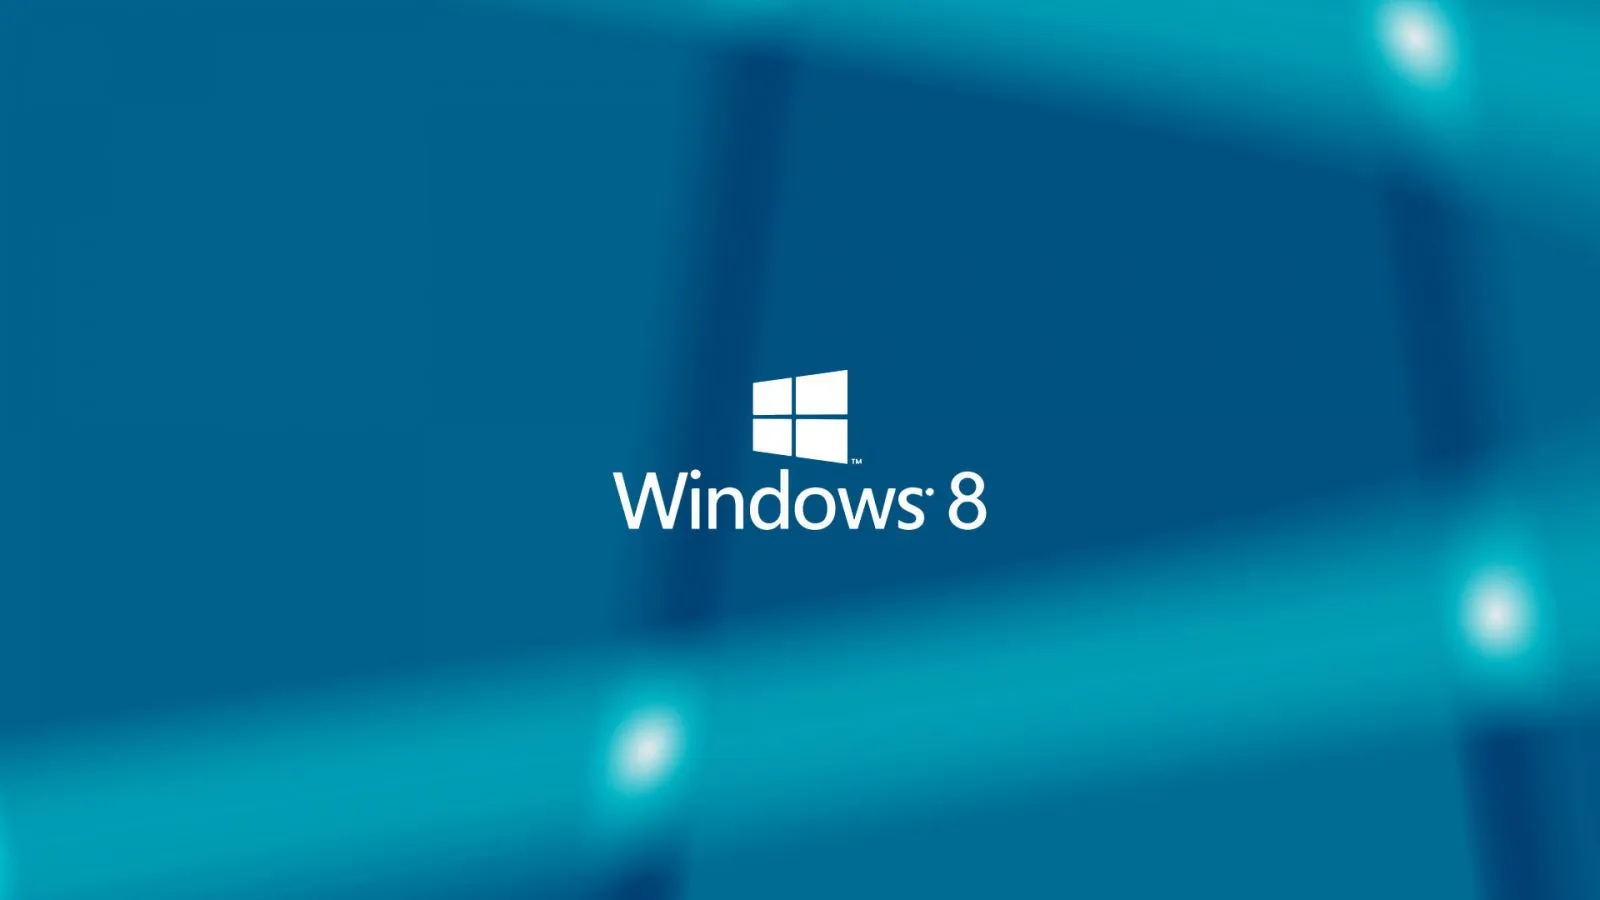 HomeMoney for Windows 8 minor release